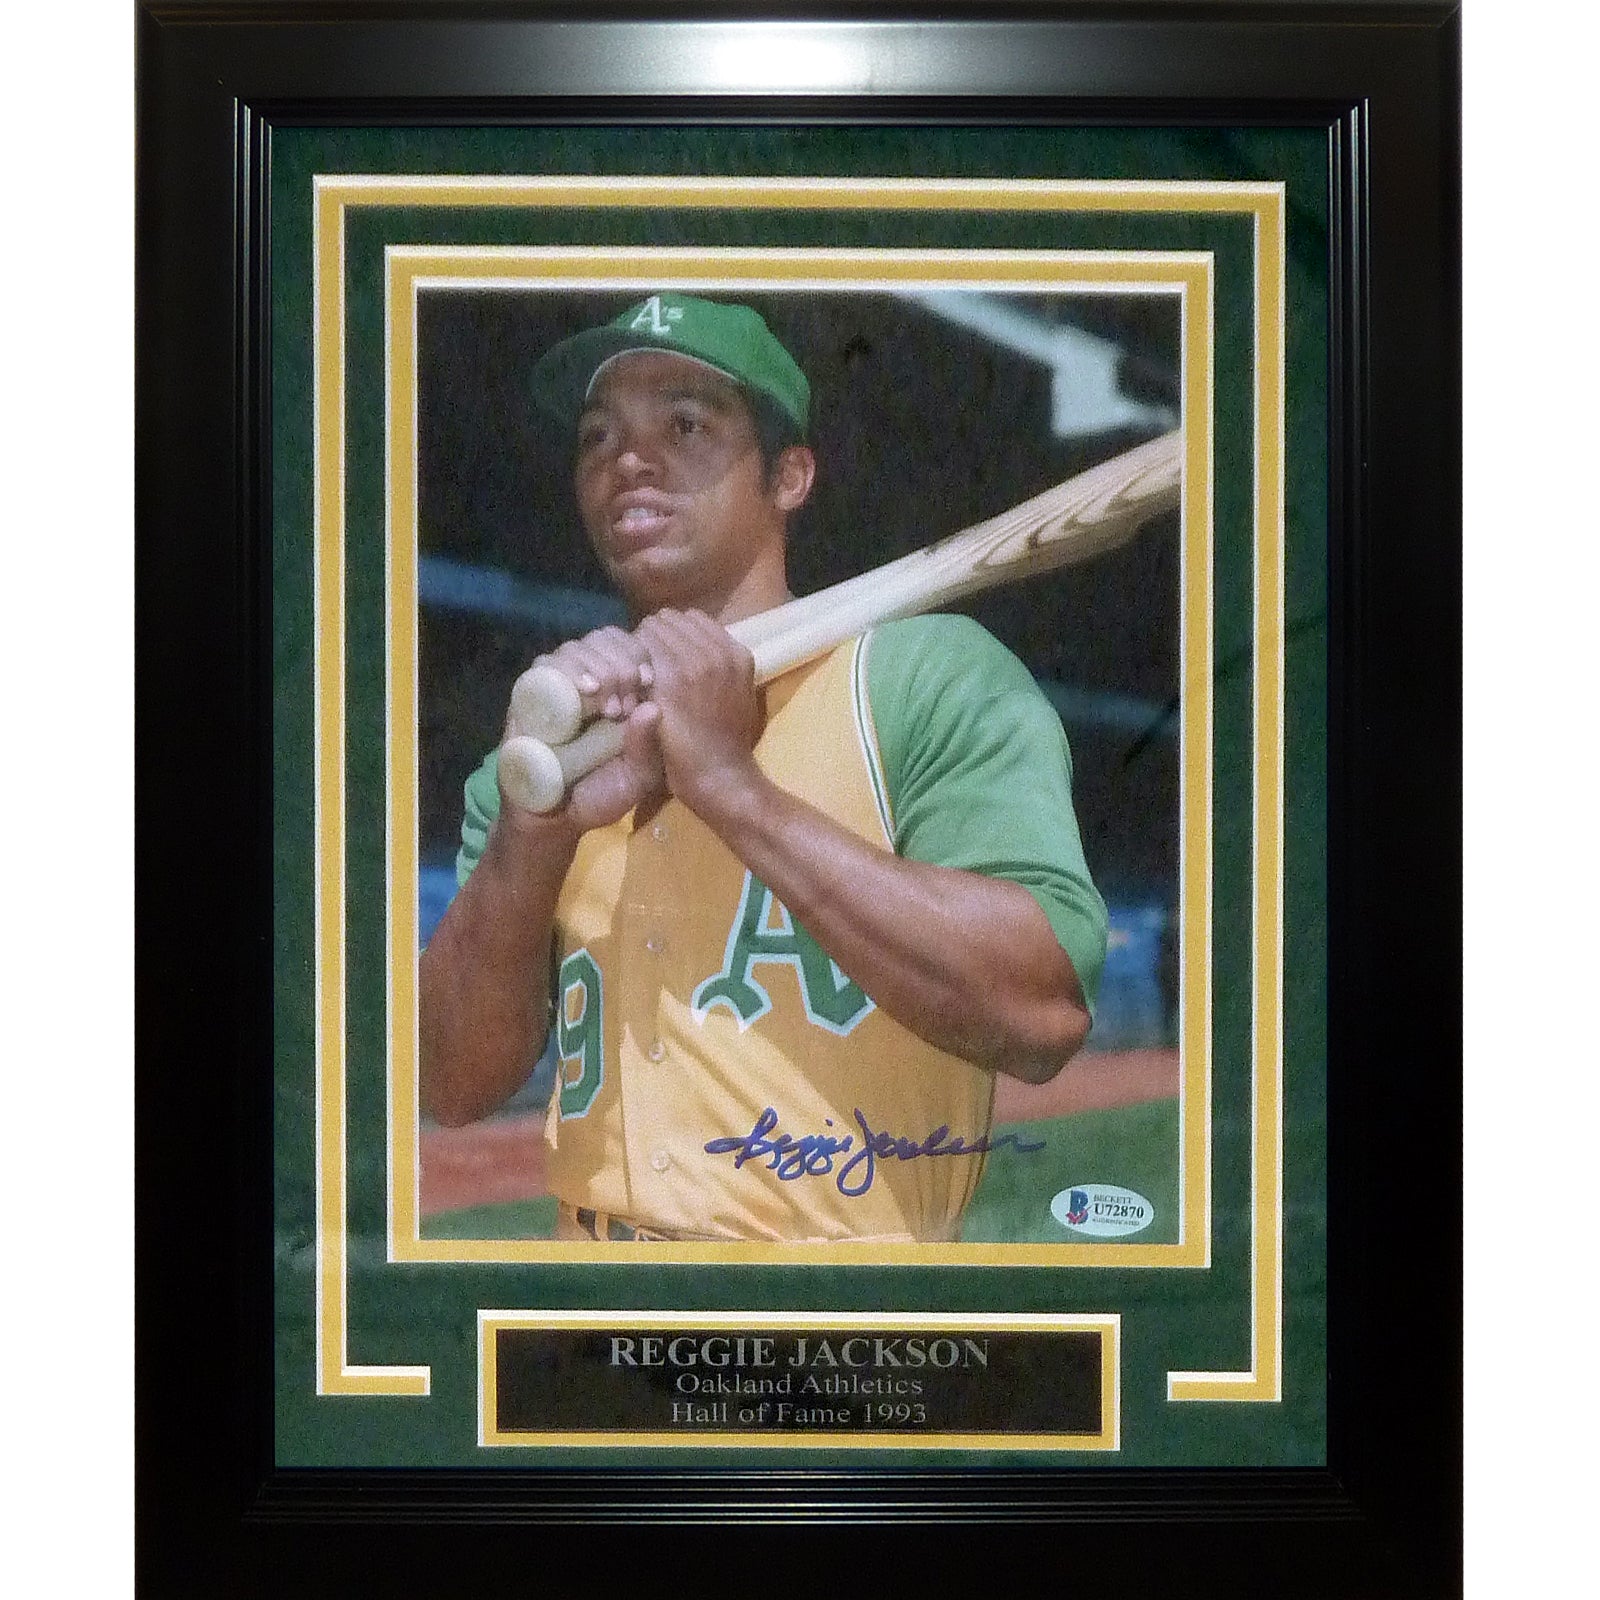 Reggie Jackson Autographed Oakland Athletics Deluxe Framed 8x10